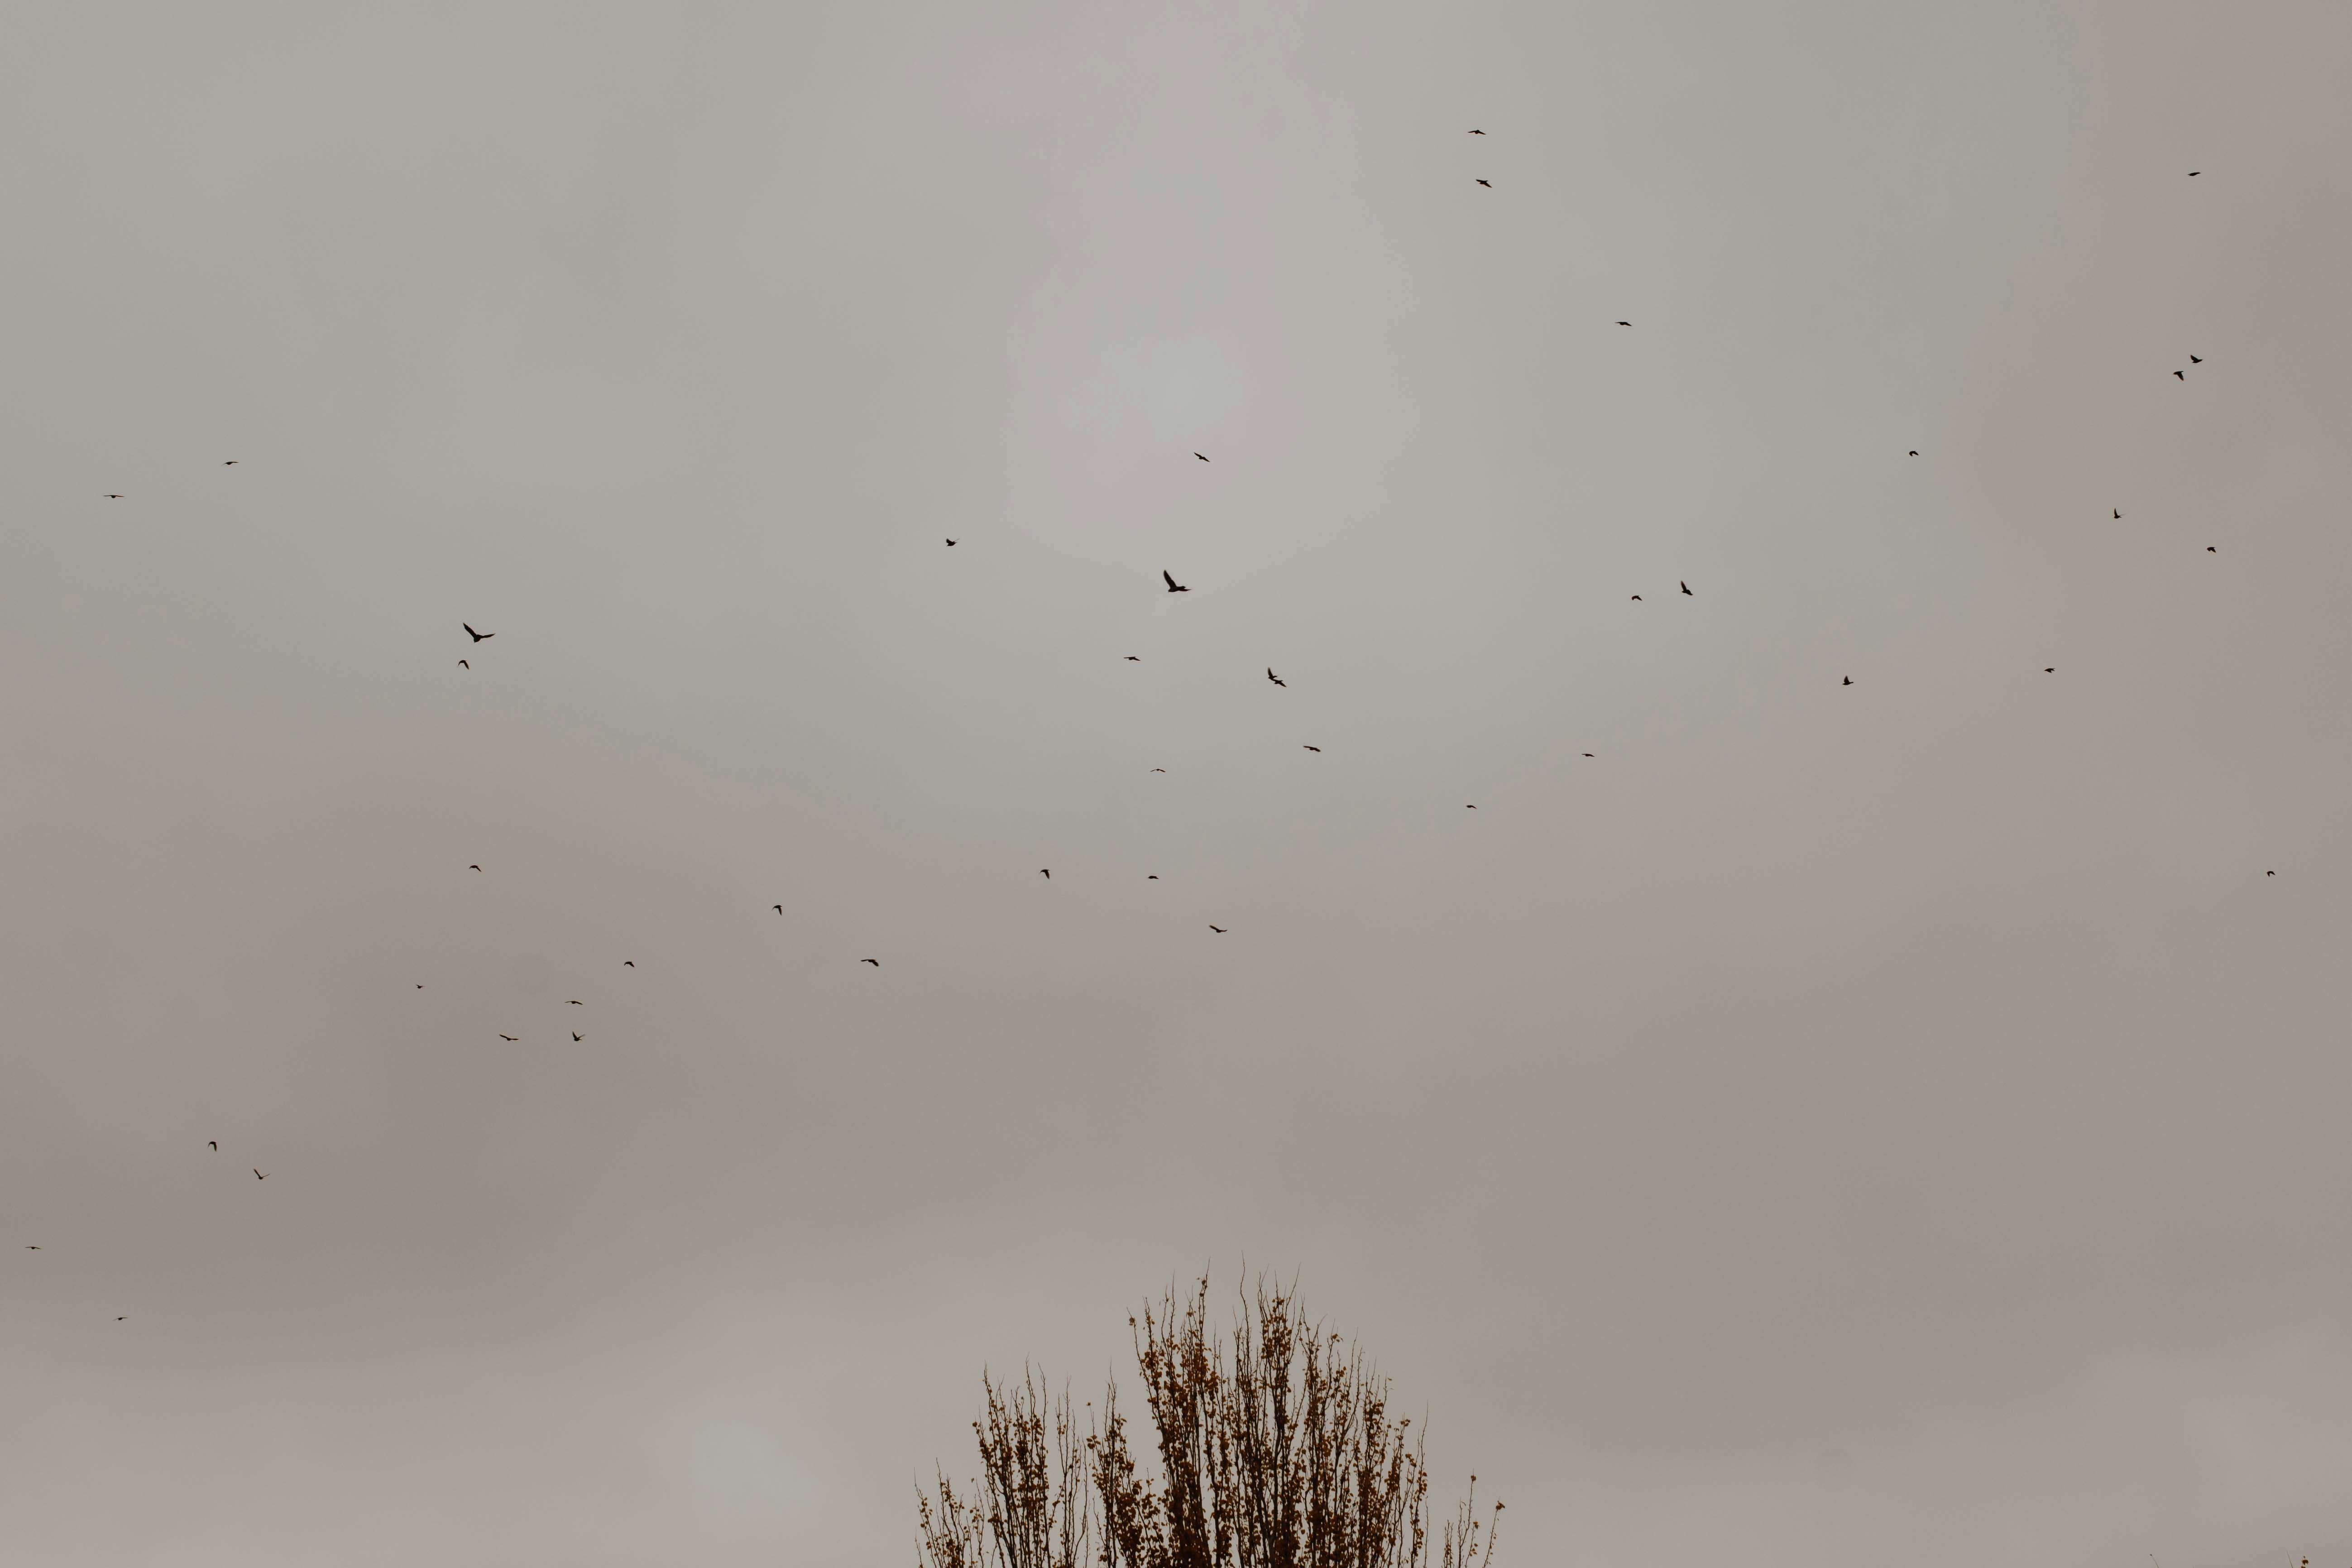 flock of birds flying over bare trees during daytime